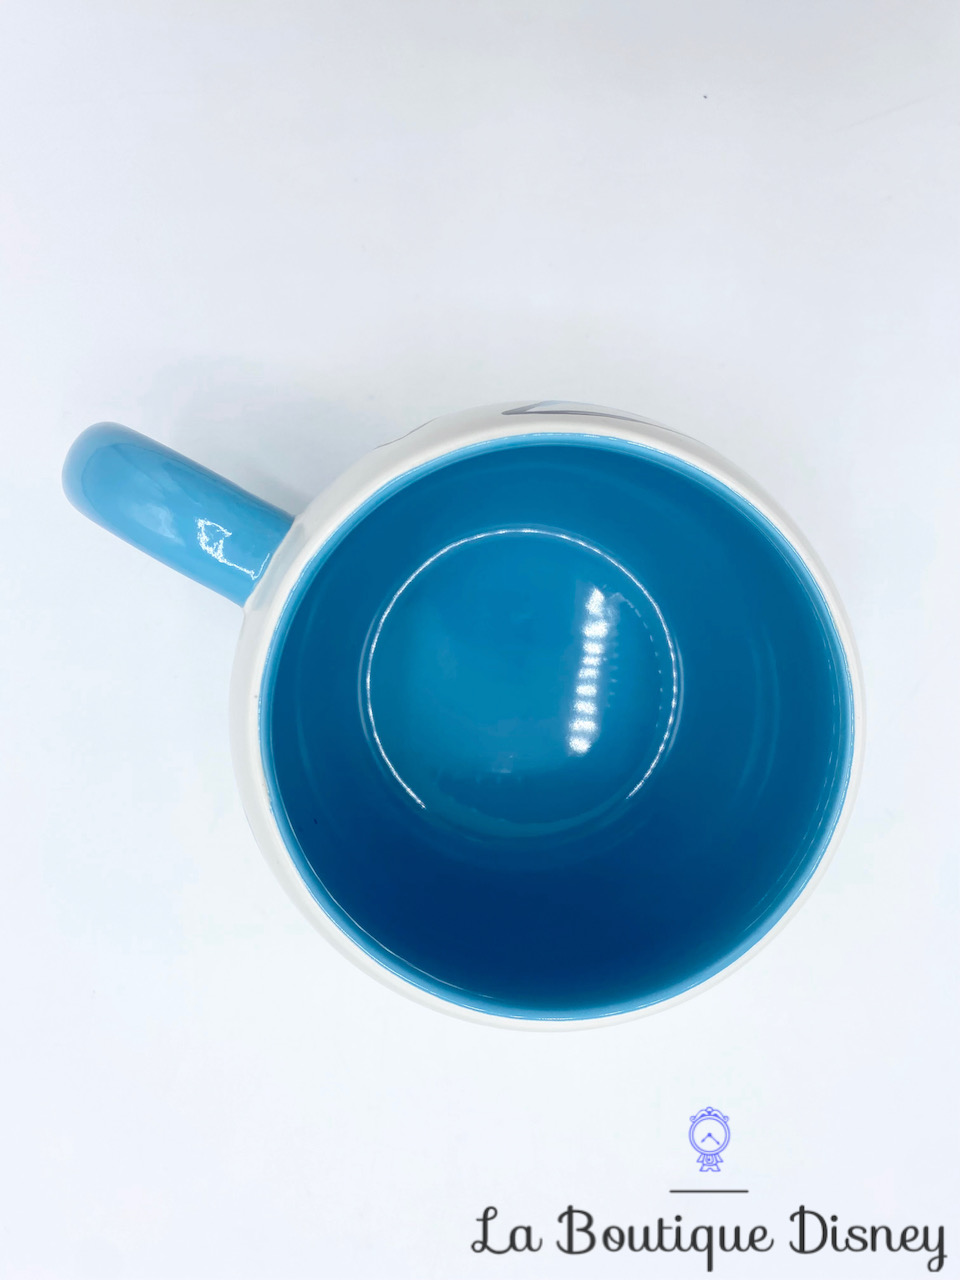 Tasse Stitch Disney Store mug Lilo et Stitch bleu blanc rond peinture dessin